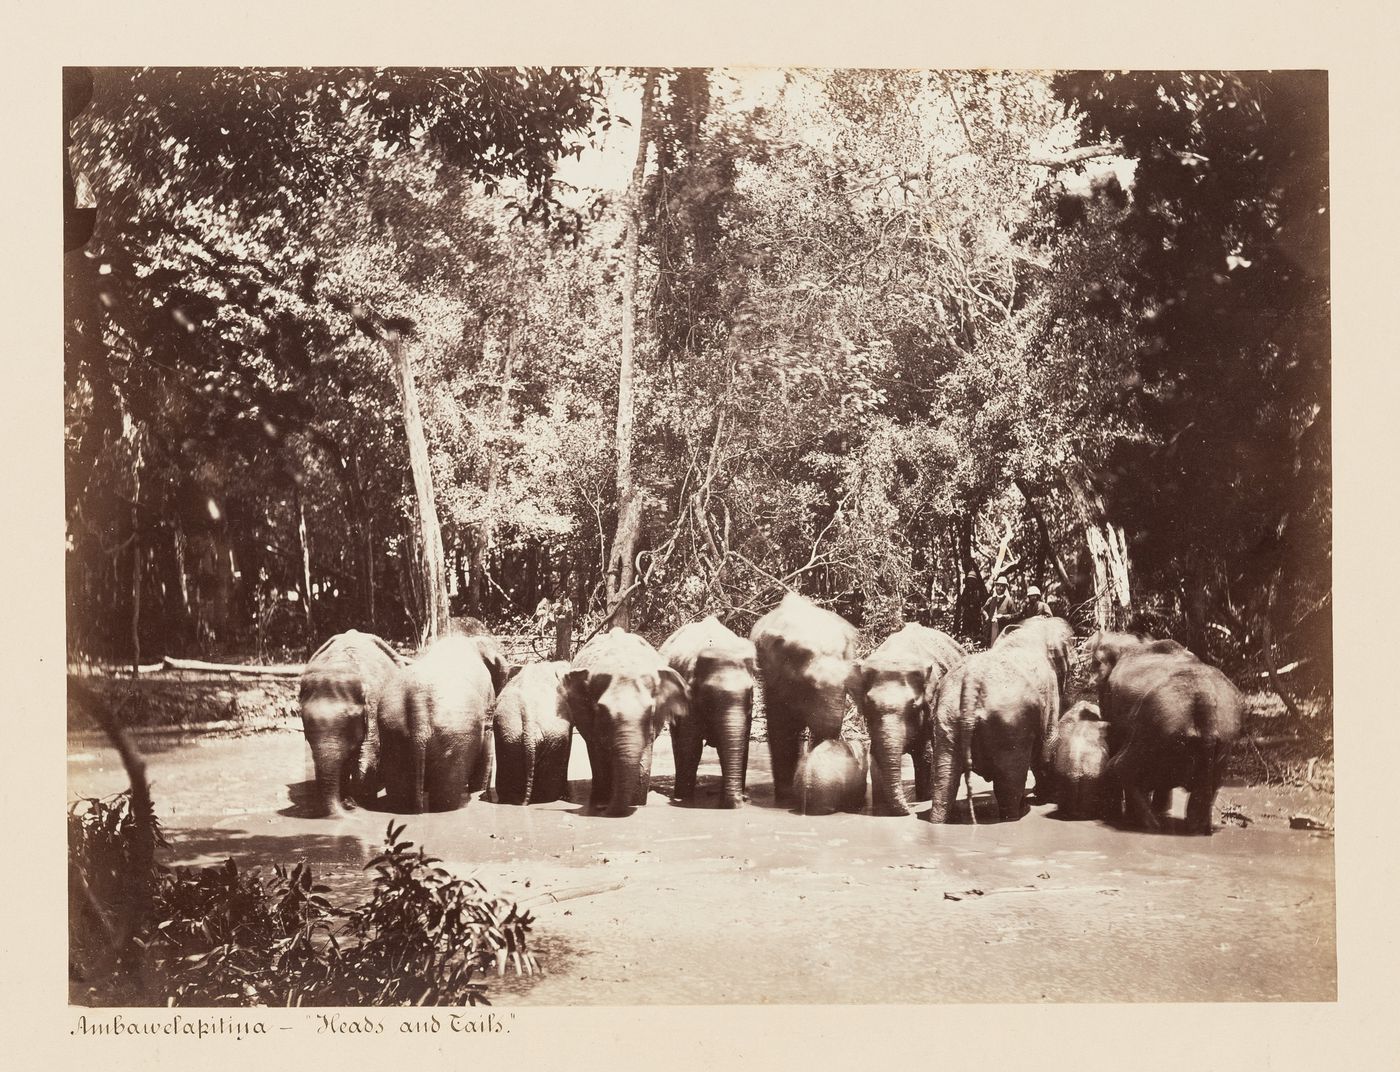 View of a herd of elephants in a pond, Ambawela, Ceylon (now Sri Lanka)